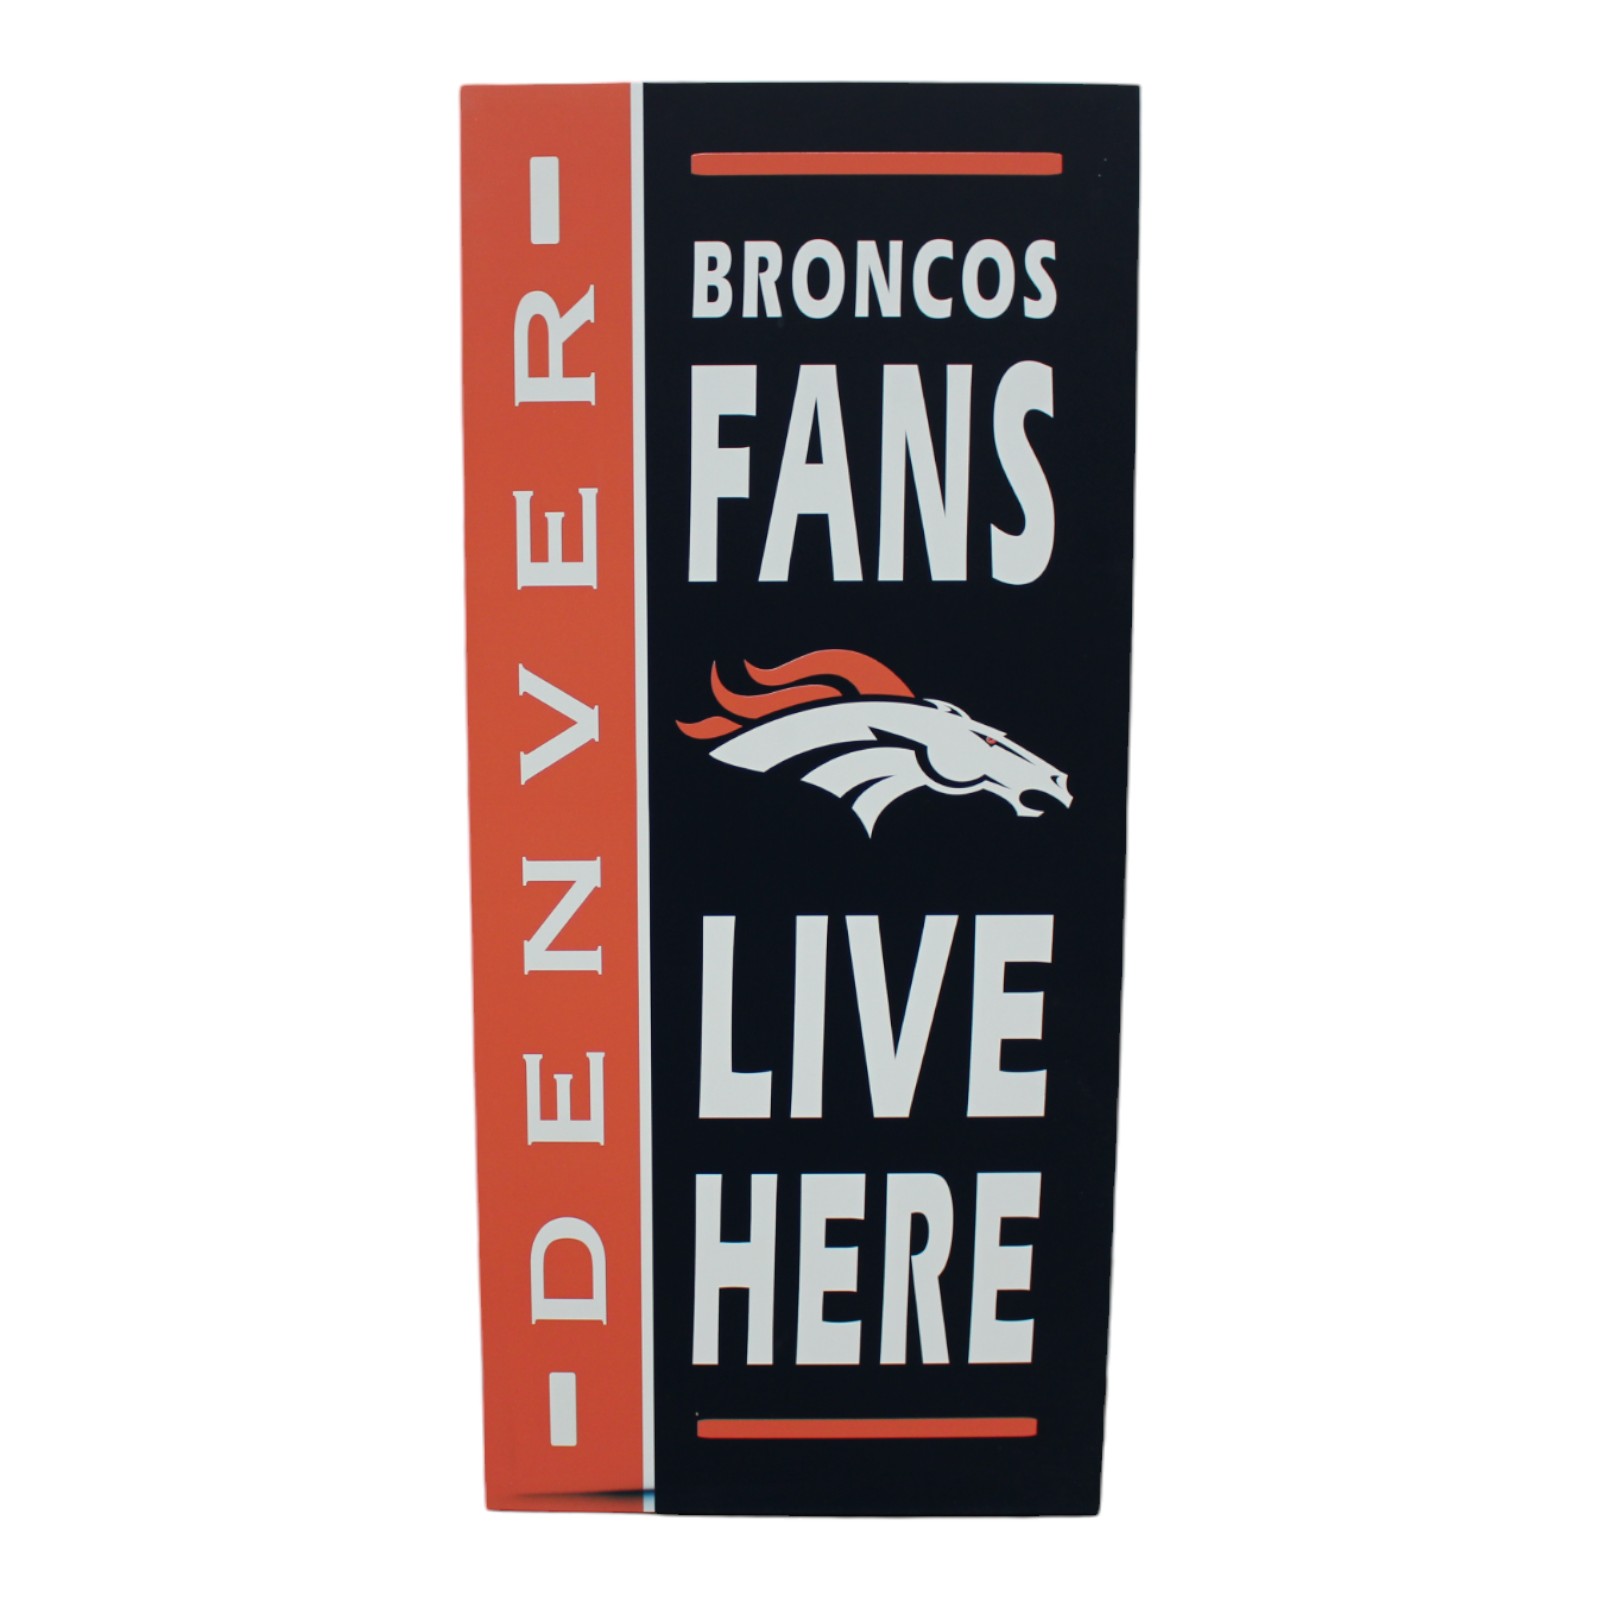 Denver Broncos Decorative 30x14 Wood Sign - Fans Live Here